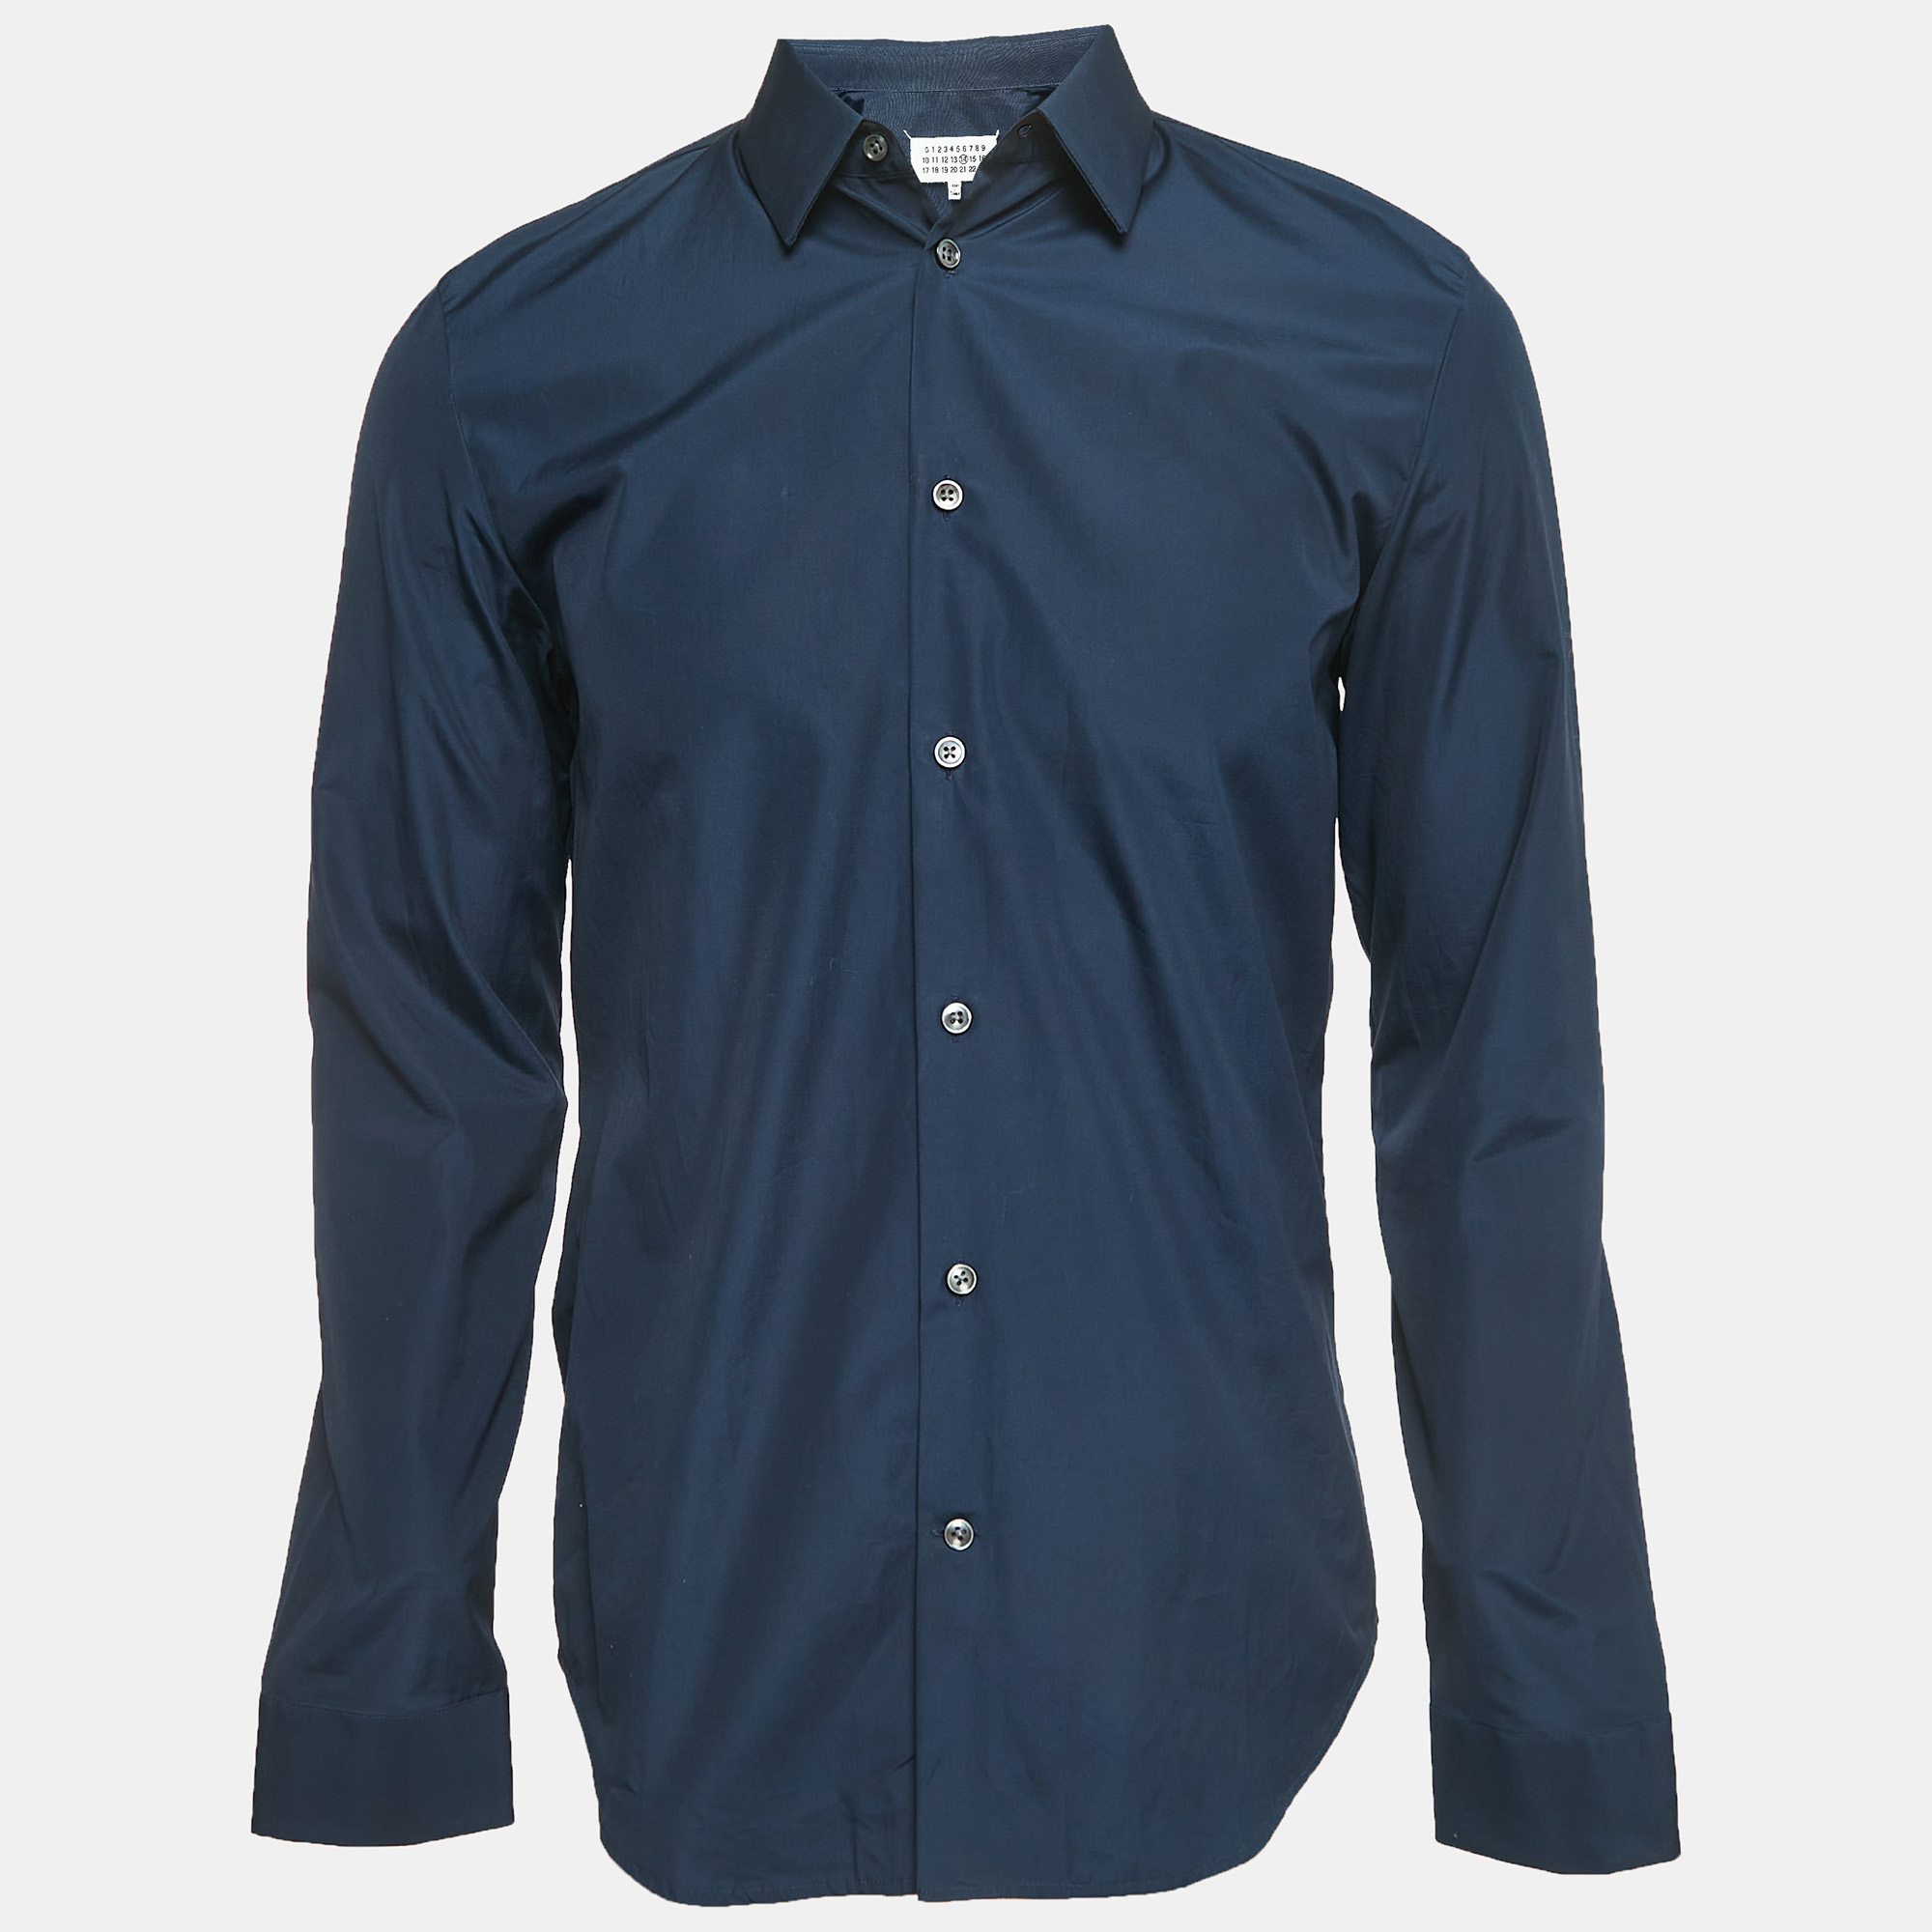 Maison Martin Margiela Navy Blue Cotton Shirt M